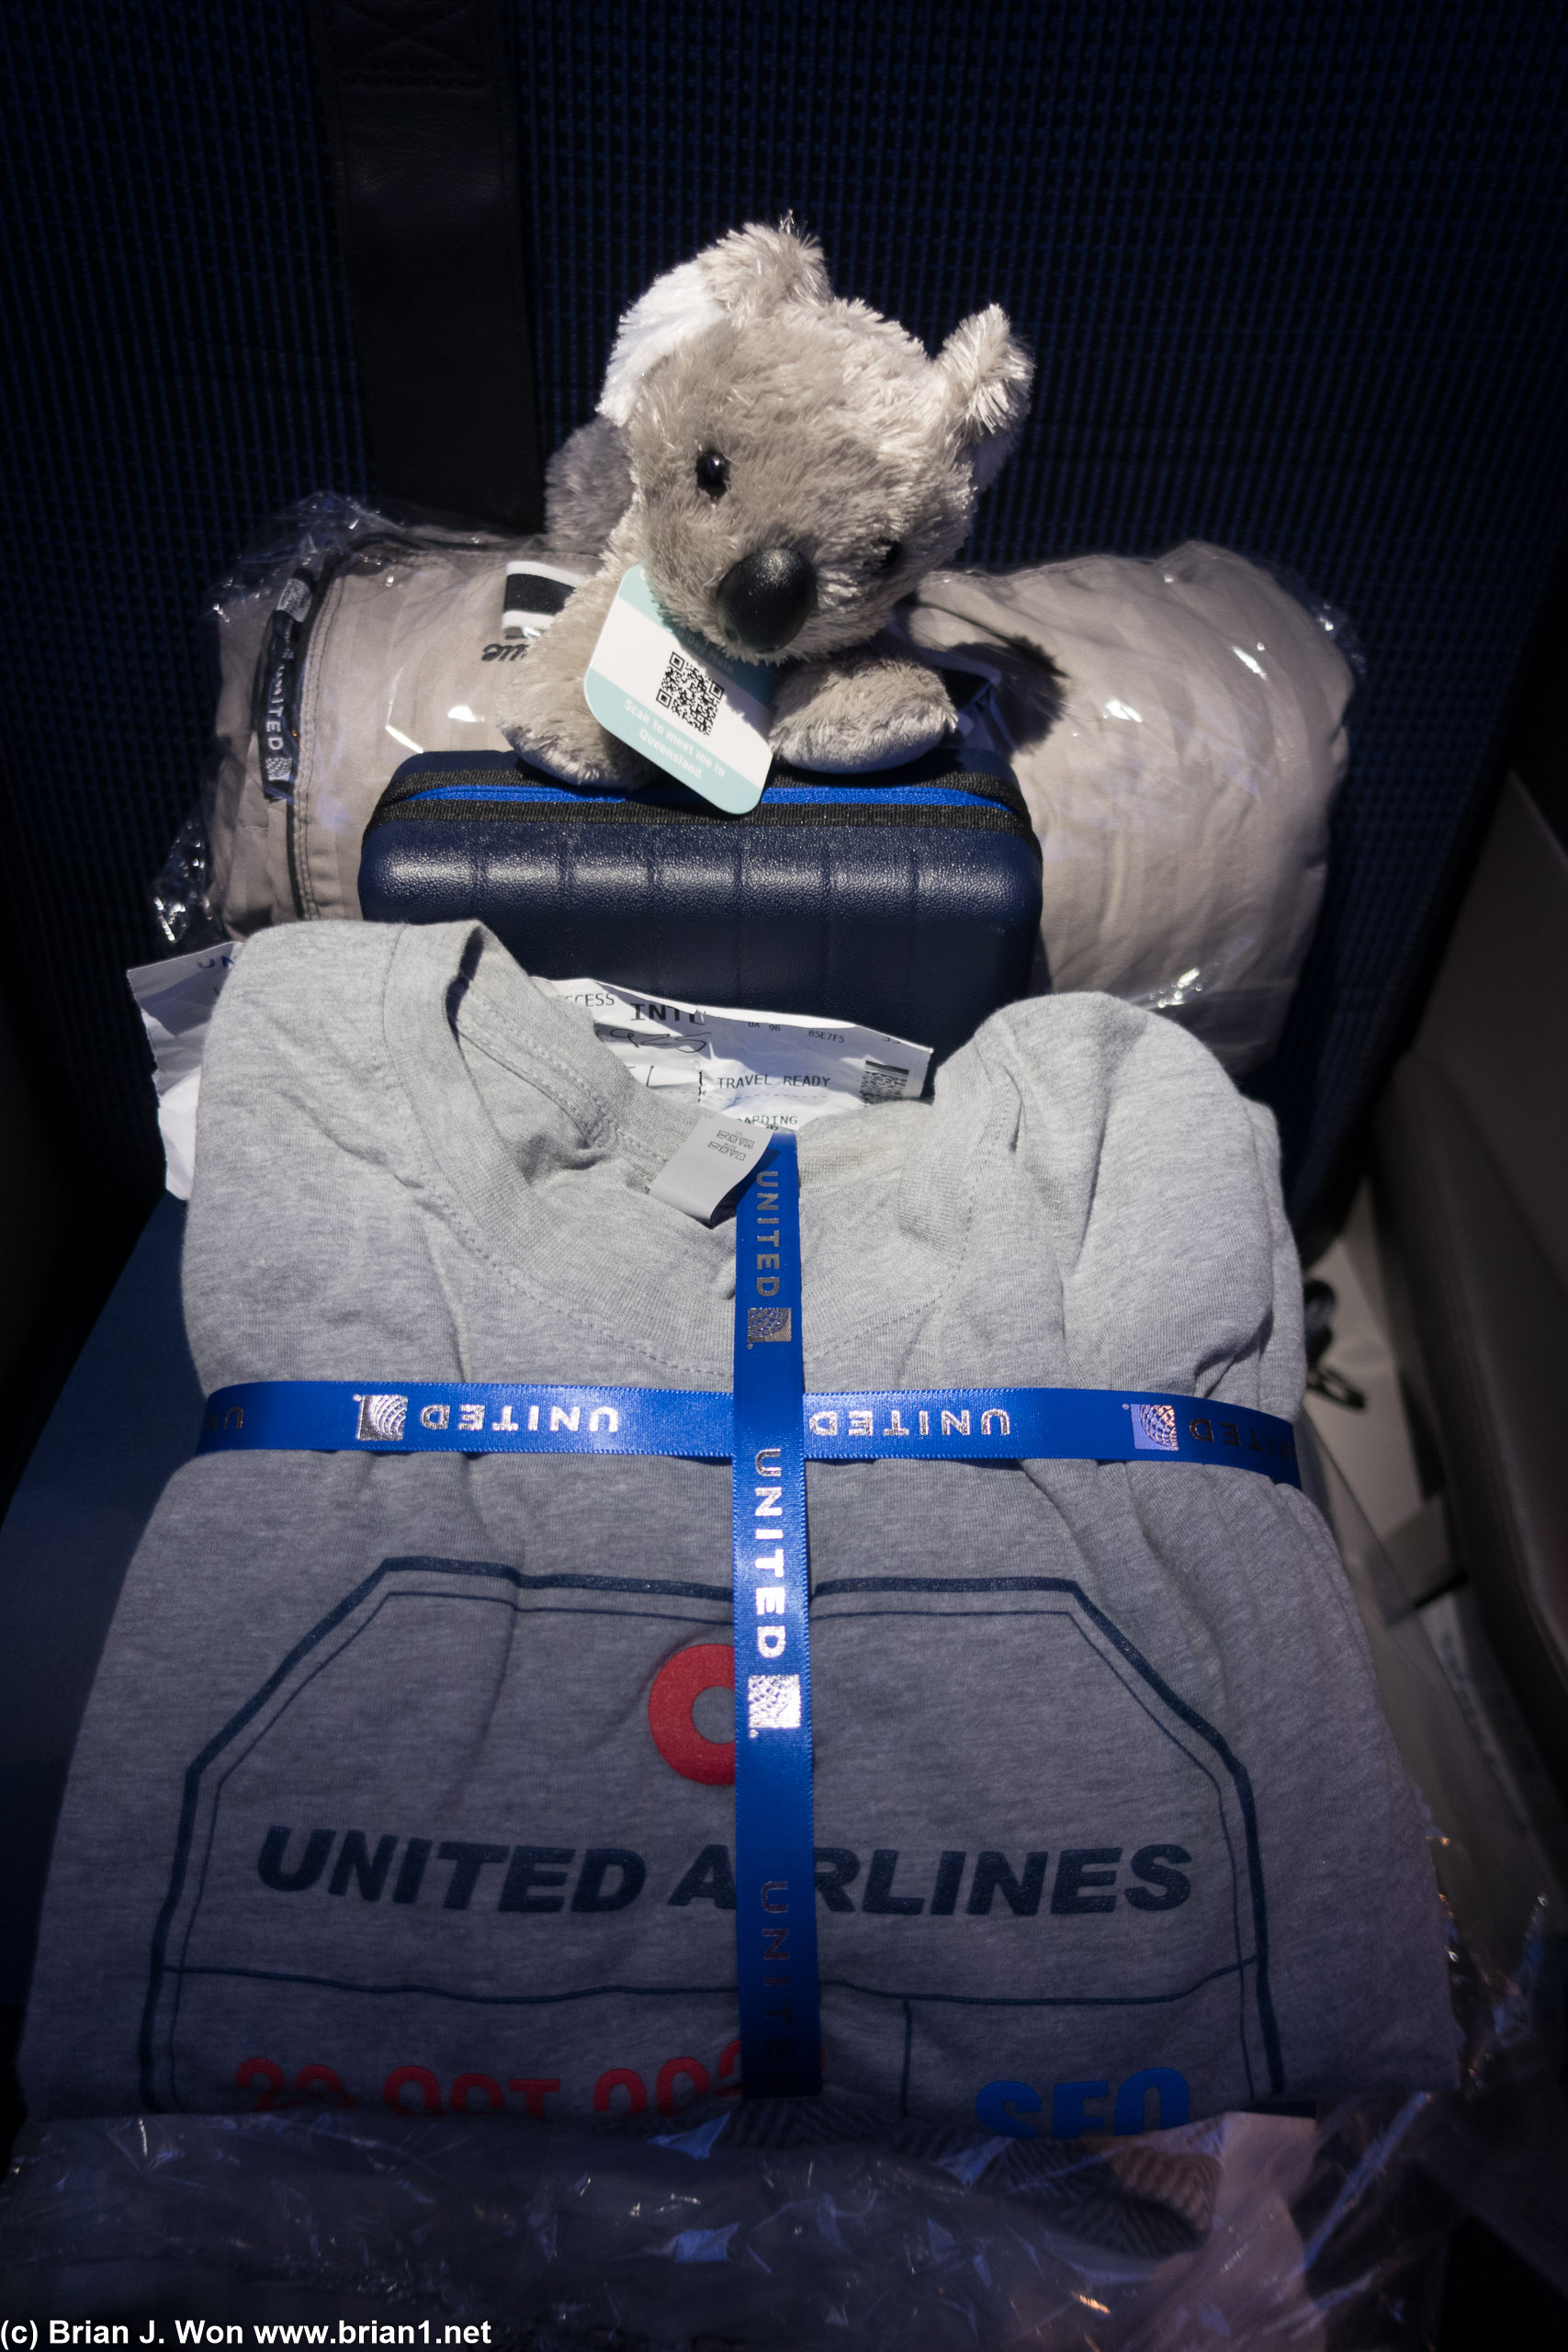 Better shot of the inaugural flight pajamas and koala.